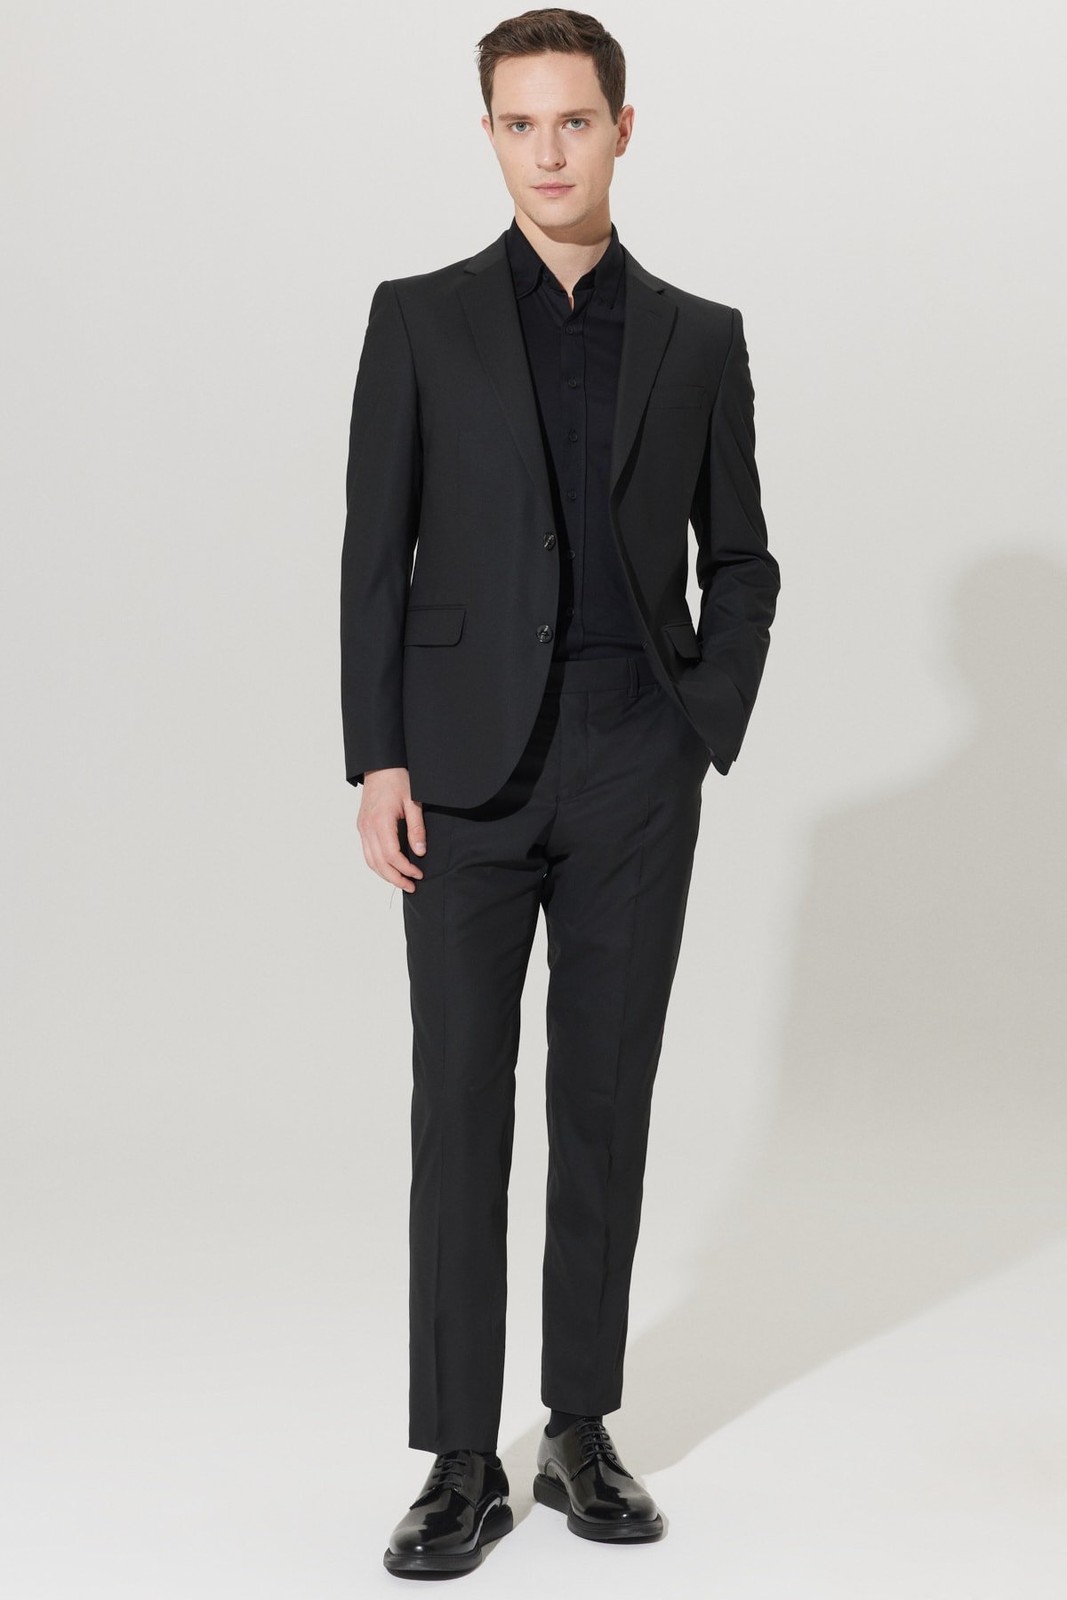 ALTINYILDIZ CLASSICS Men's Black Regular Fit Normal Cut Wool Water and Stain Resistant Nano Suit